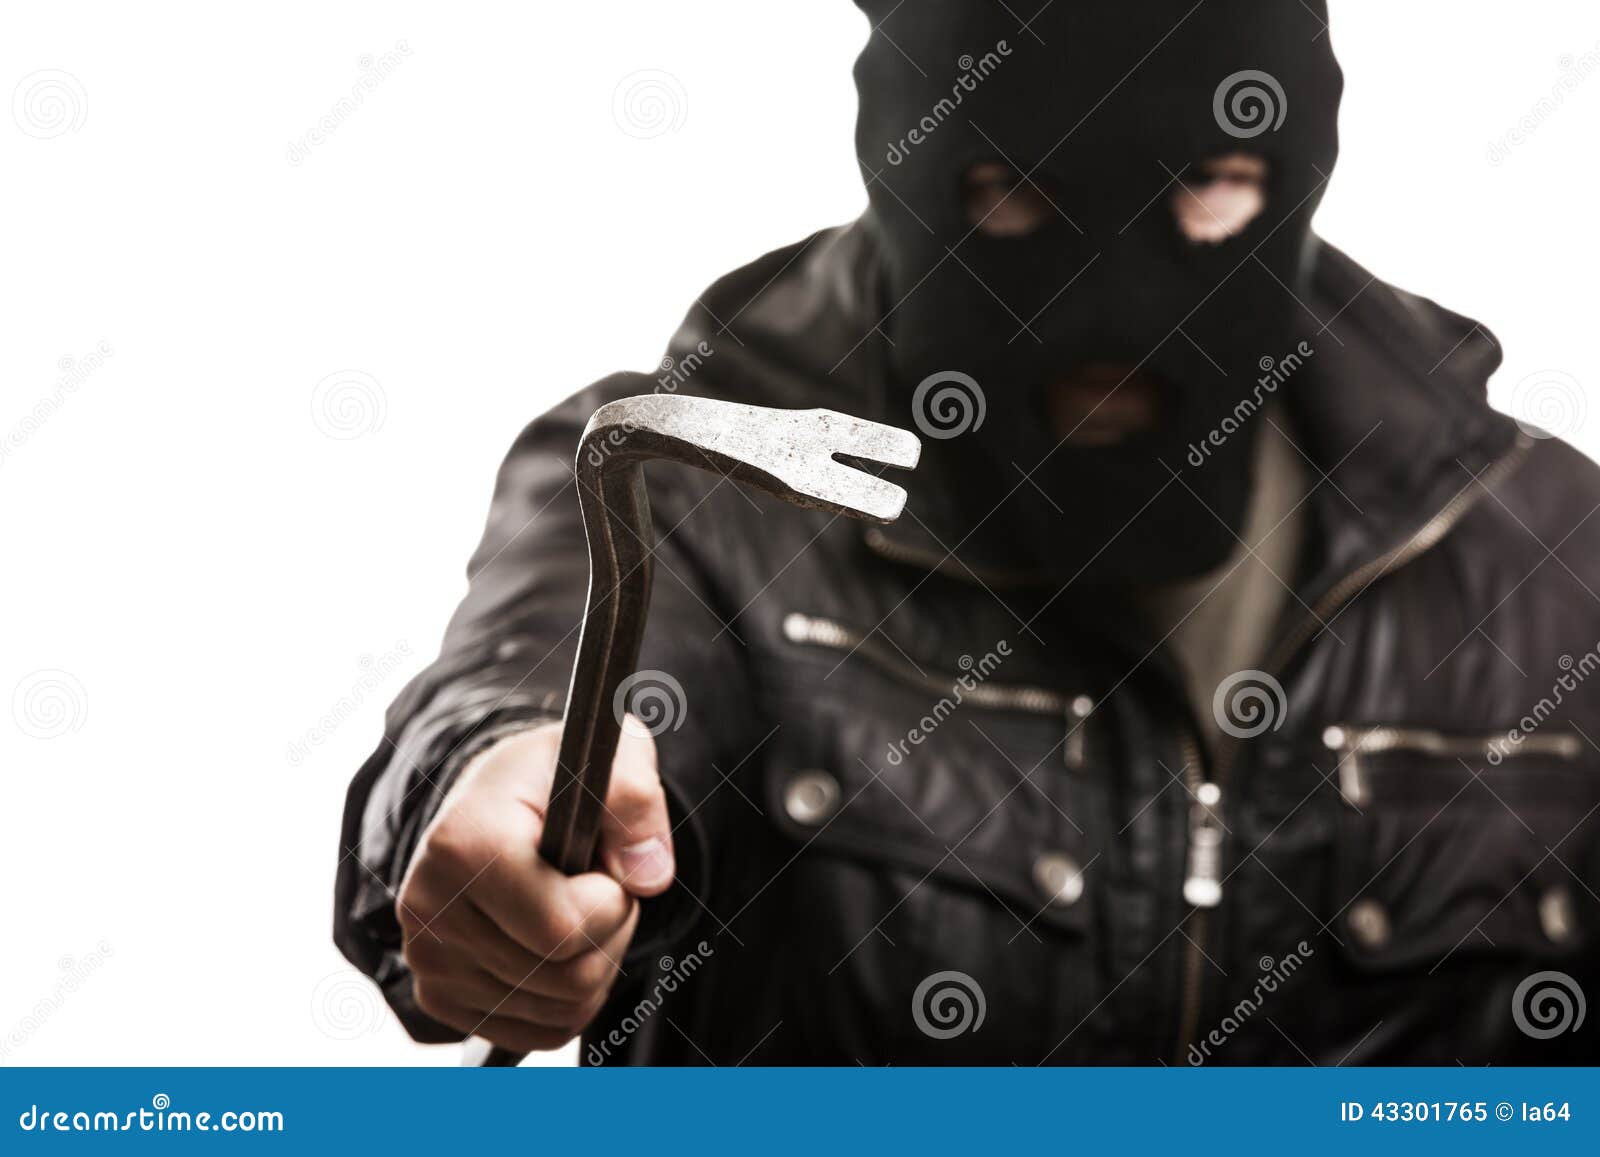 criminal thief or burglar man in balaclava or mask holding crowbar in hand